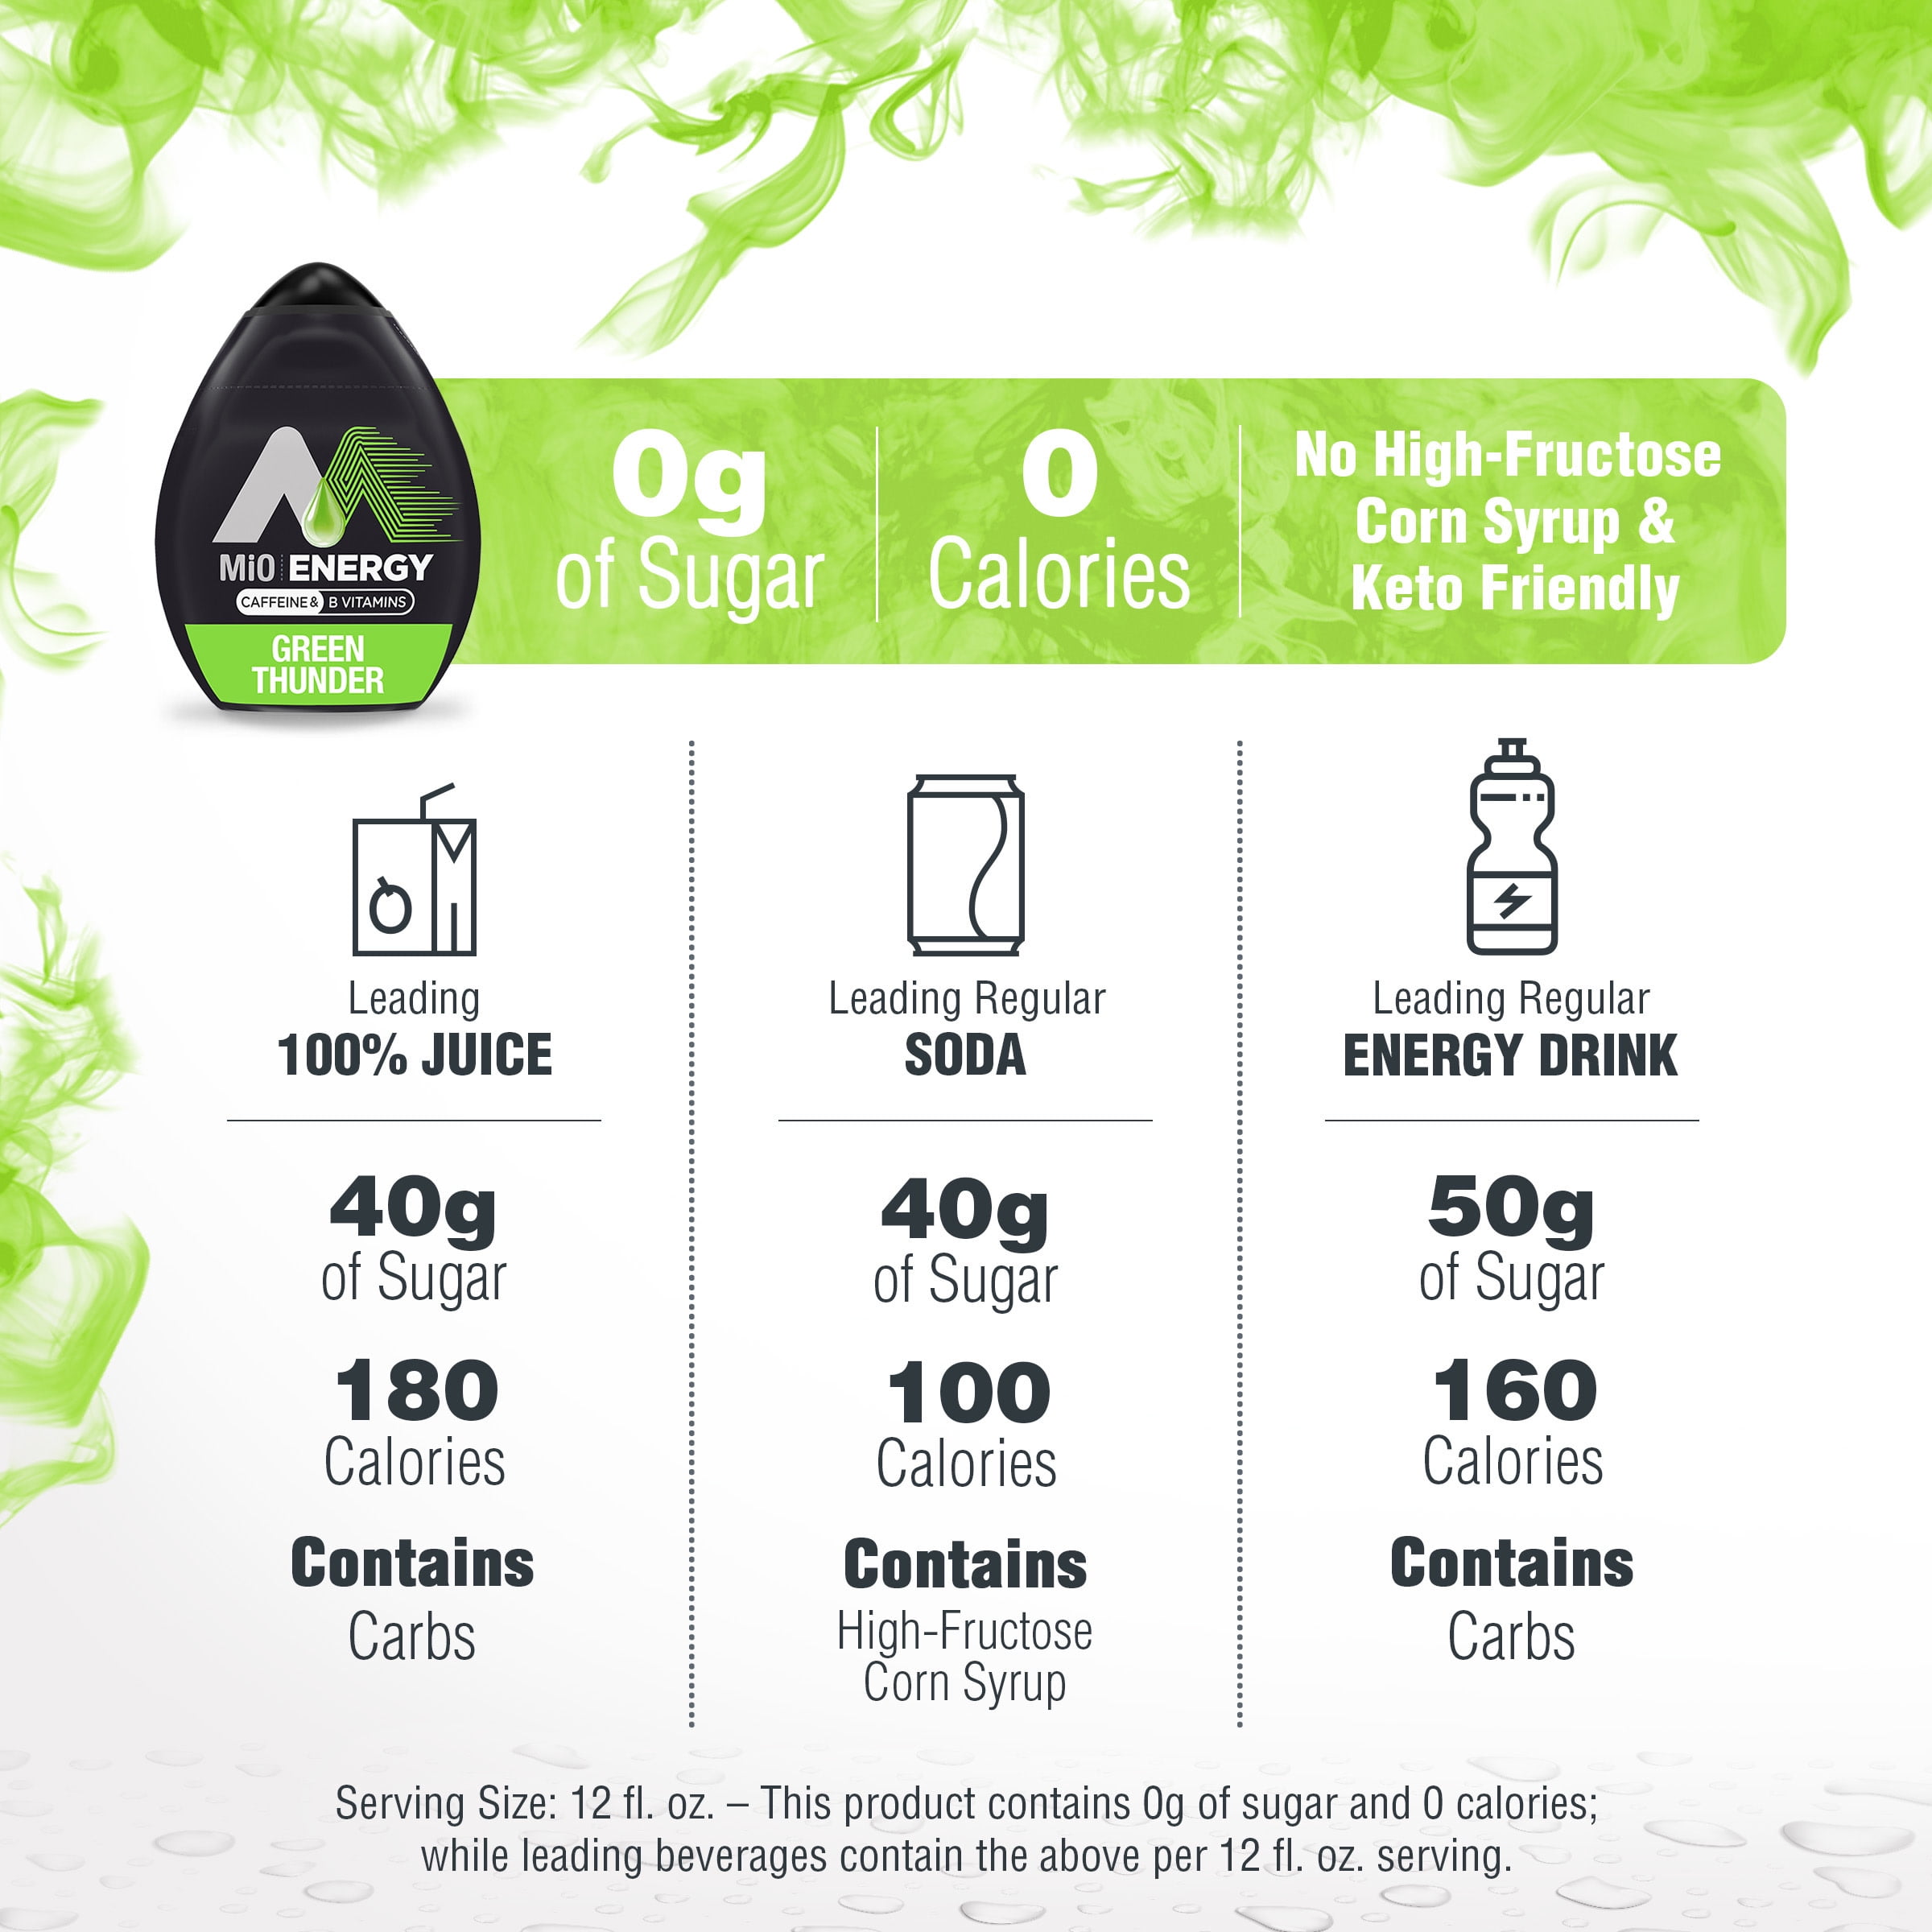 MiO Energy Green Thunder Sugar Free Water Enhancer, 1.62 fl oz